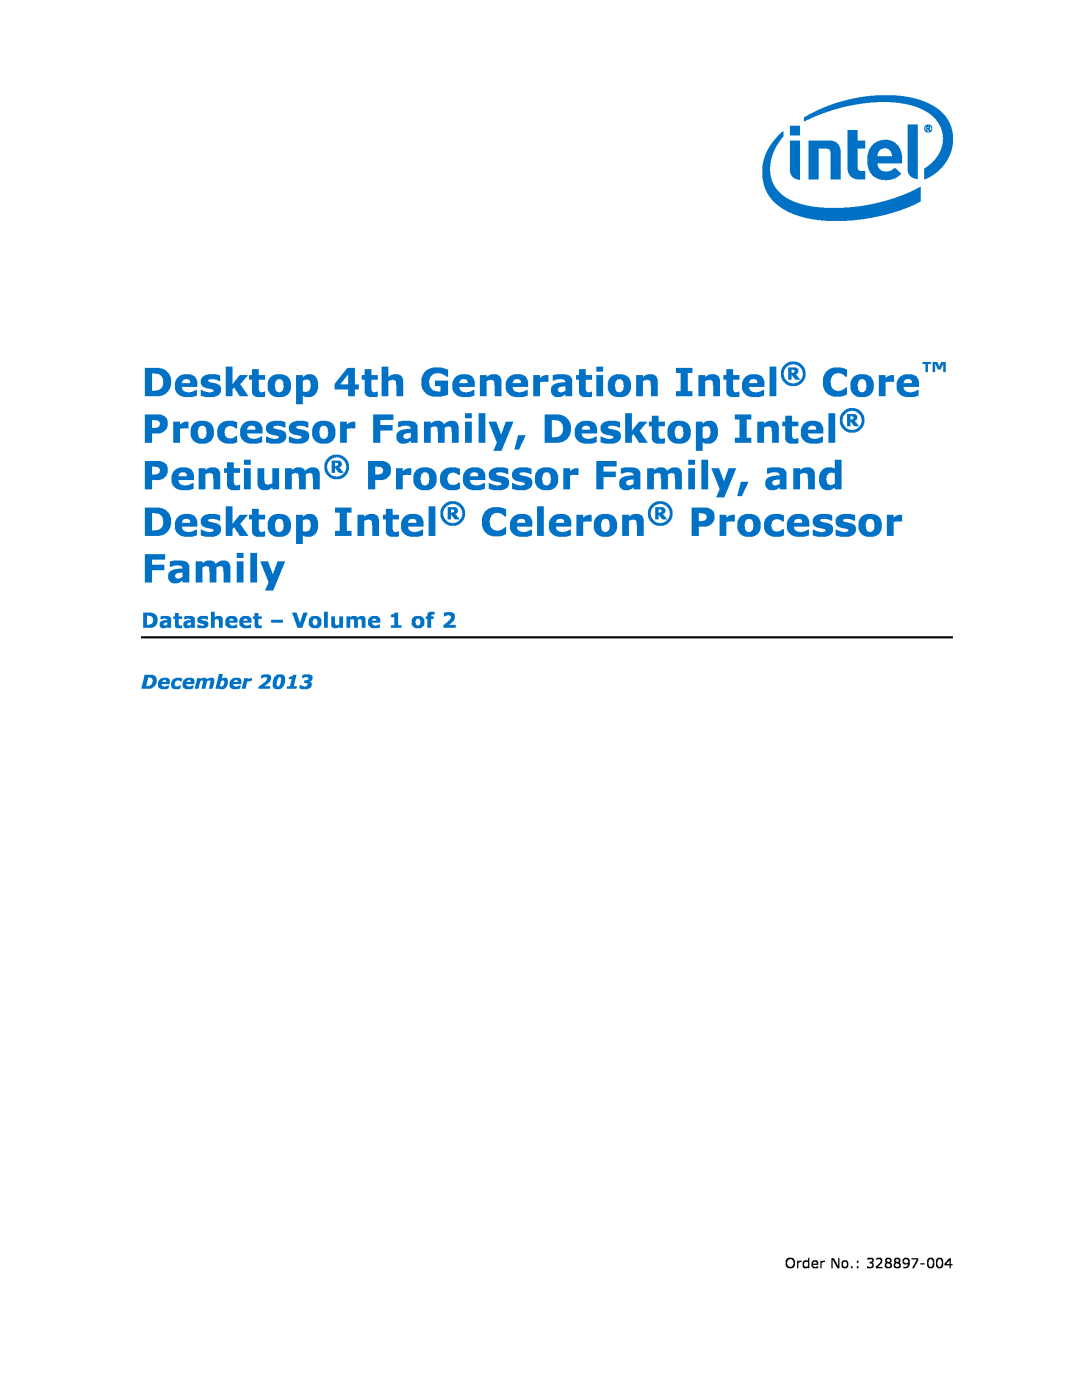 Intel BX80637I53470, CM8063701159502 warranty INTEL CORE i5 DESKTOP PROCESSOR COMPARISON CHART, Instructions, DDR3 